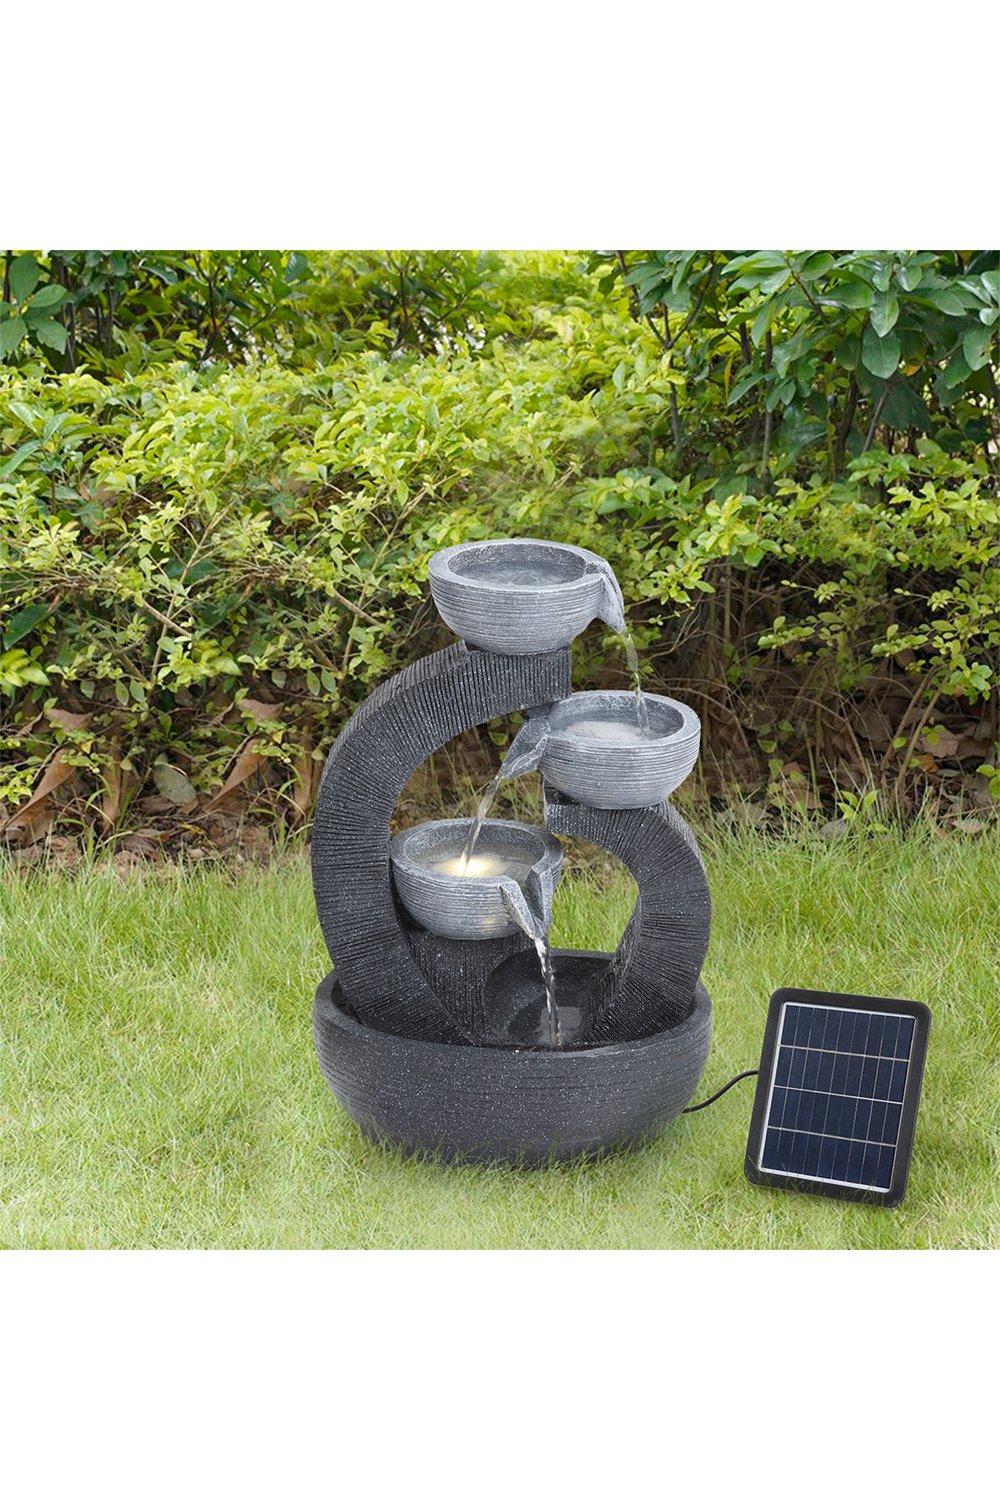 Garden Solar-Powered Water Fountain Rockery Decor